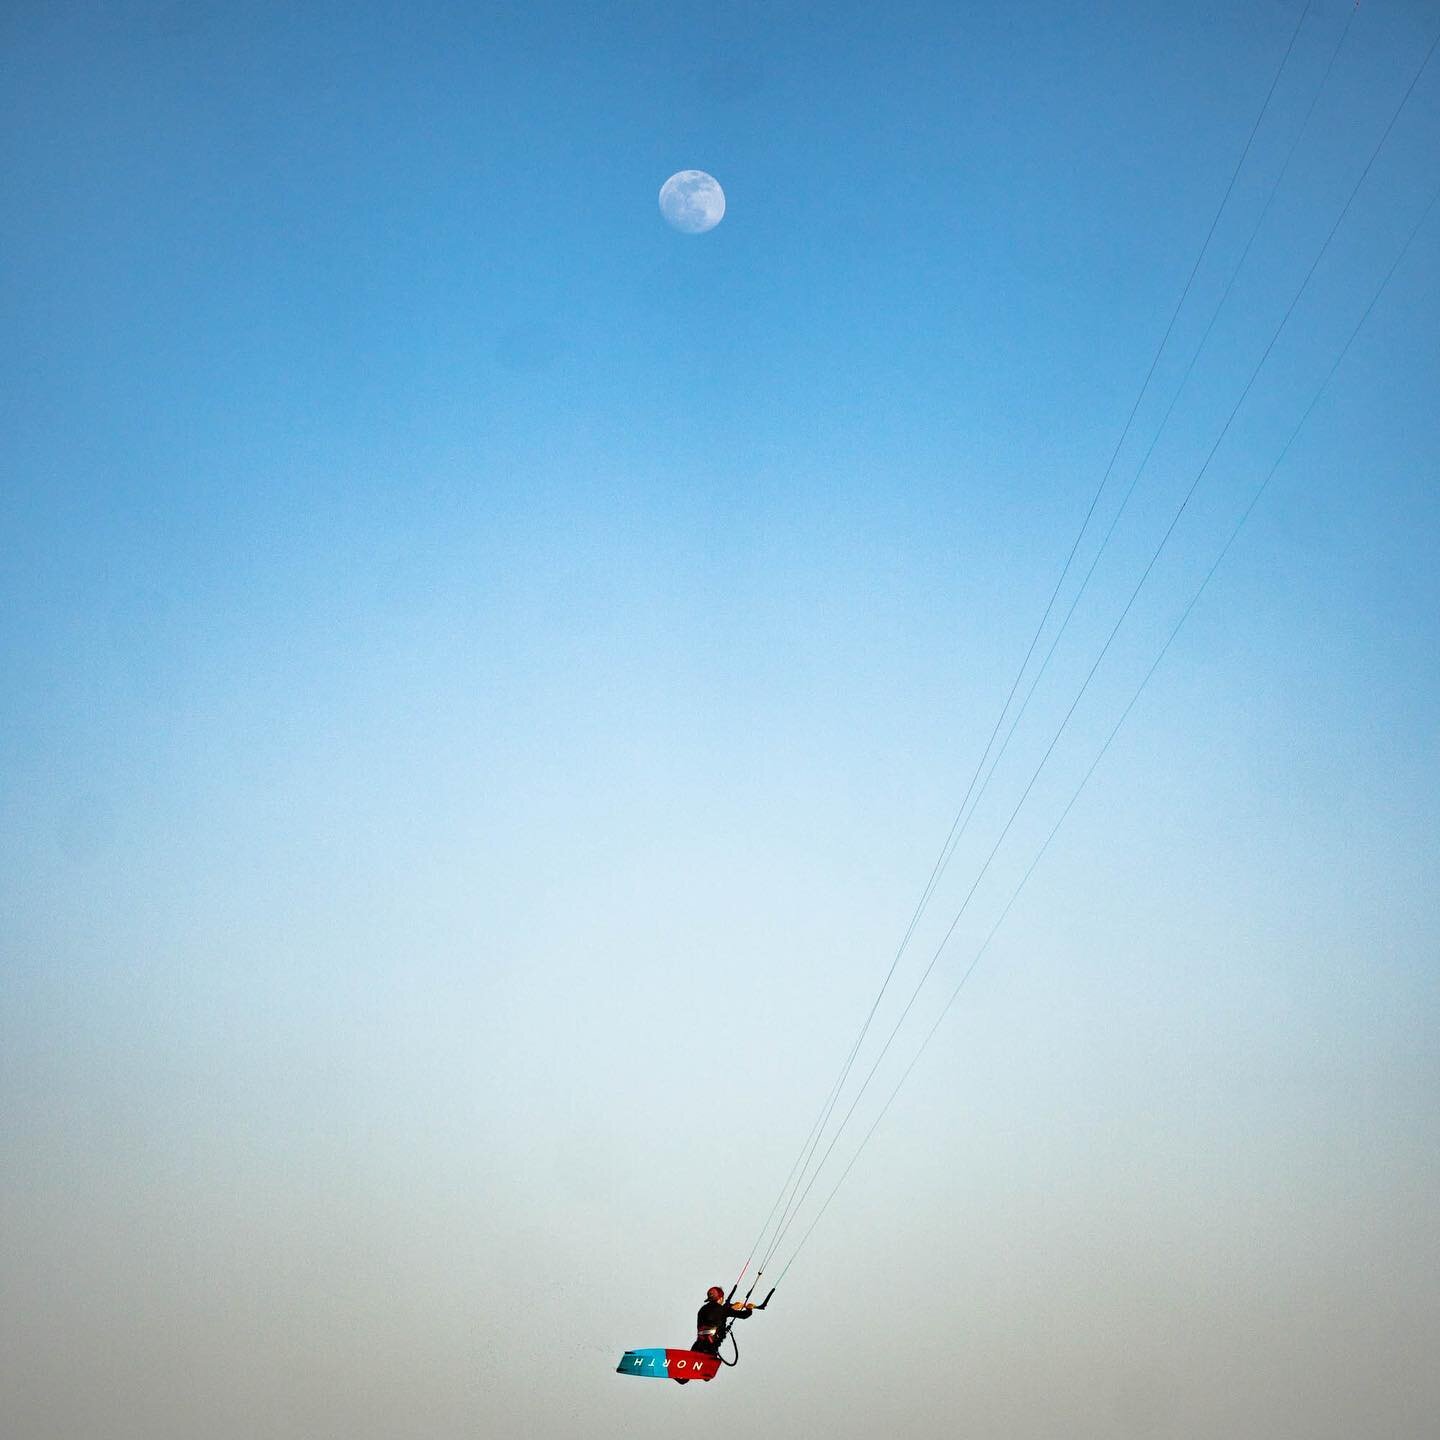 Moonrise kite sessions

#kitesurf #egypt #kitecruise #moonrise #sunset #theriderexperience